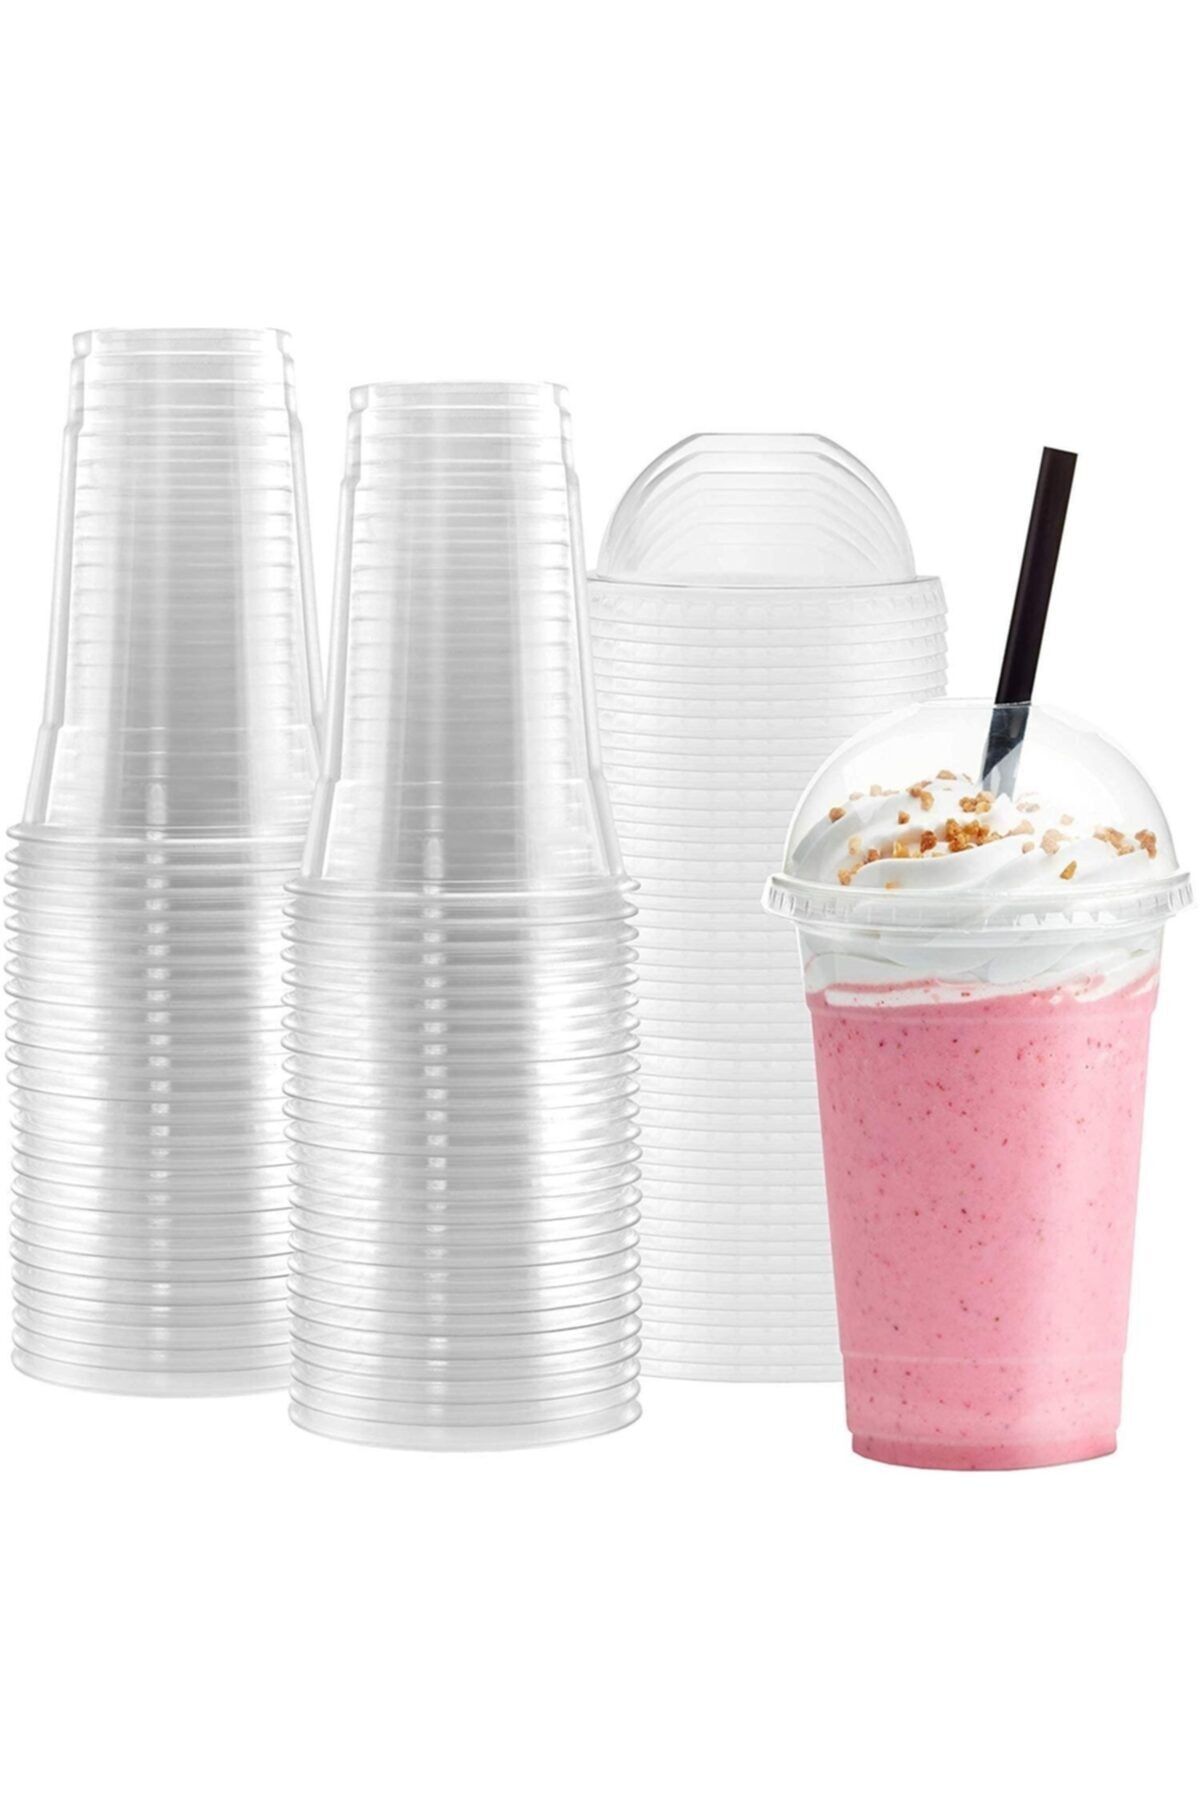 14Süs 550cc Pet Plastik Limonata Milkshake Bardağı 10 adet Kapaklı